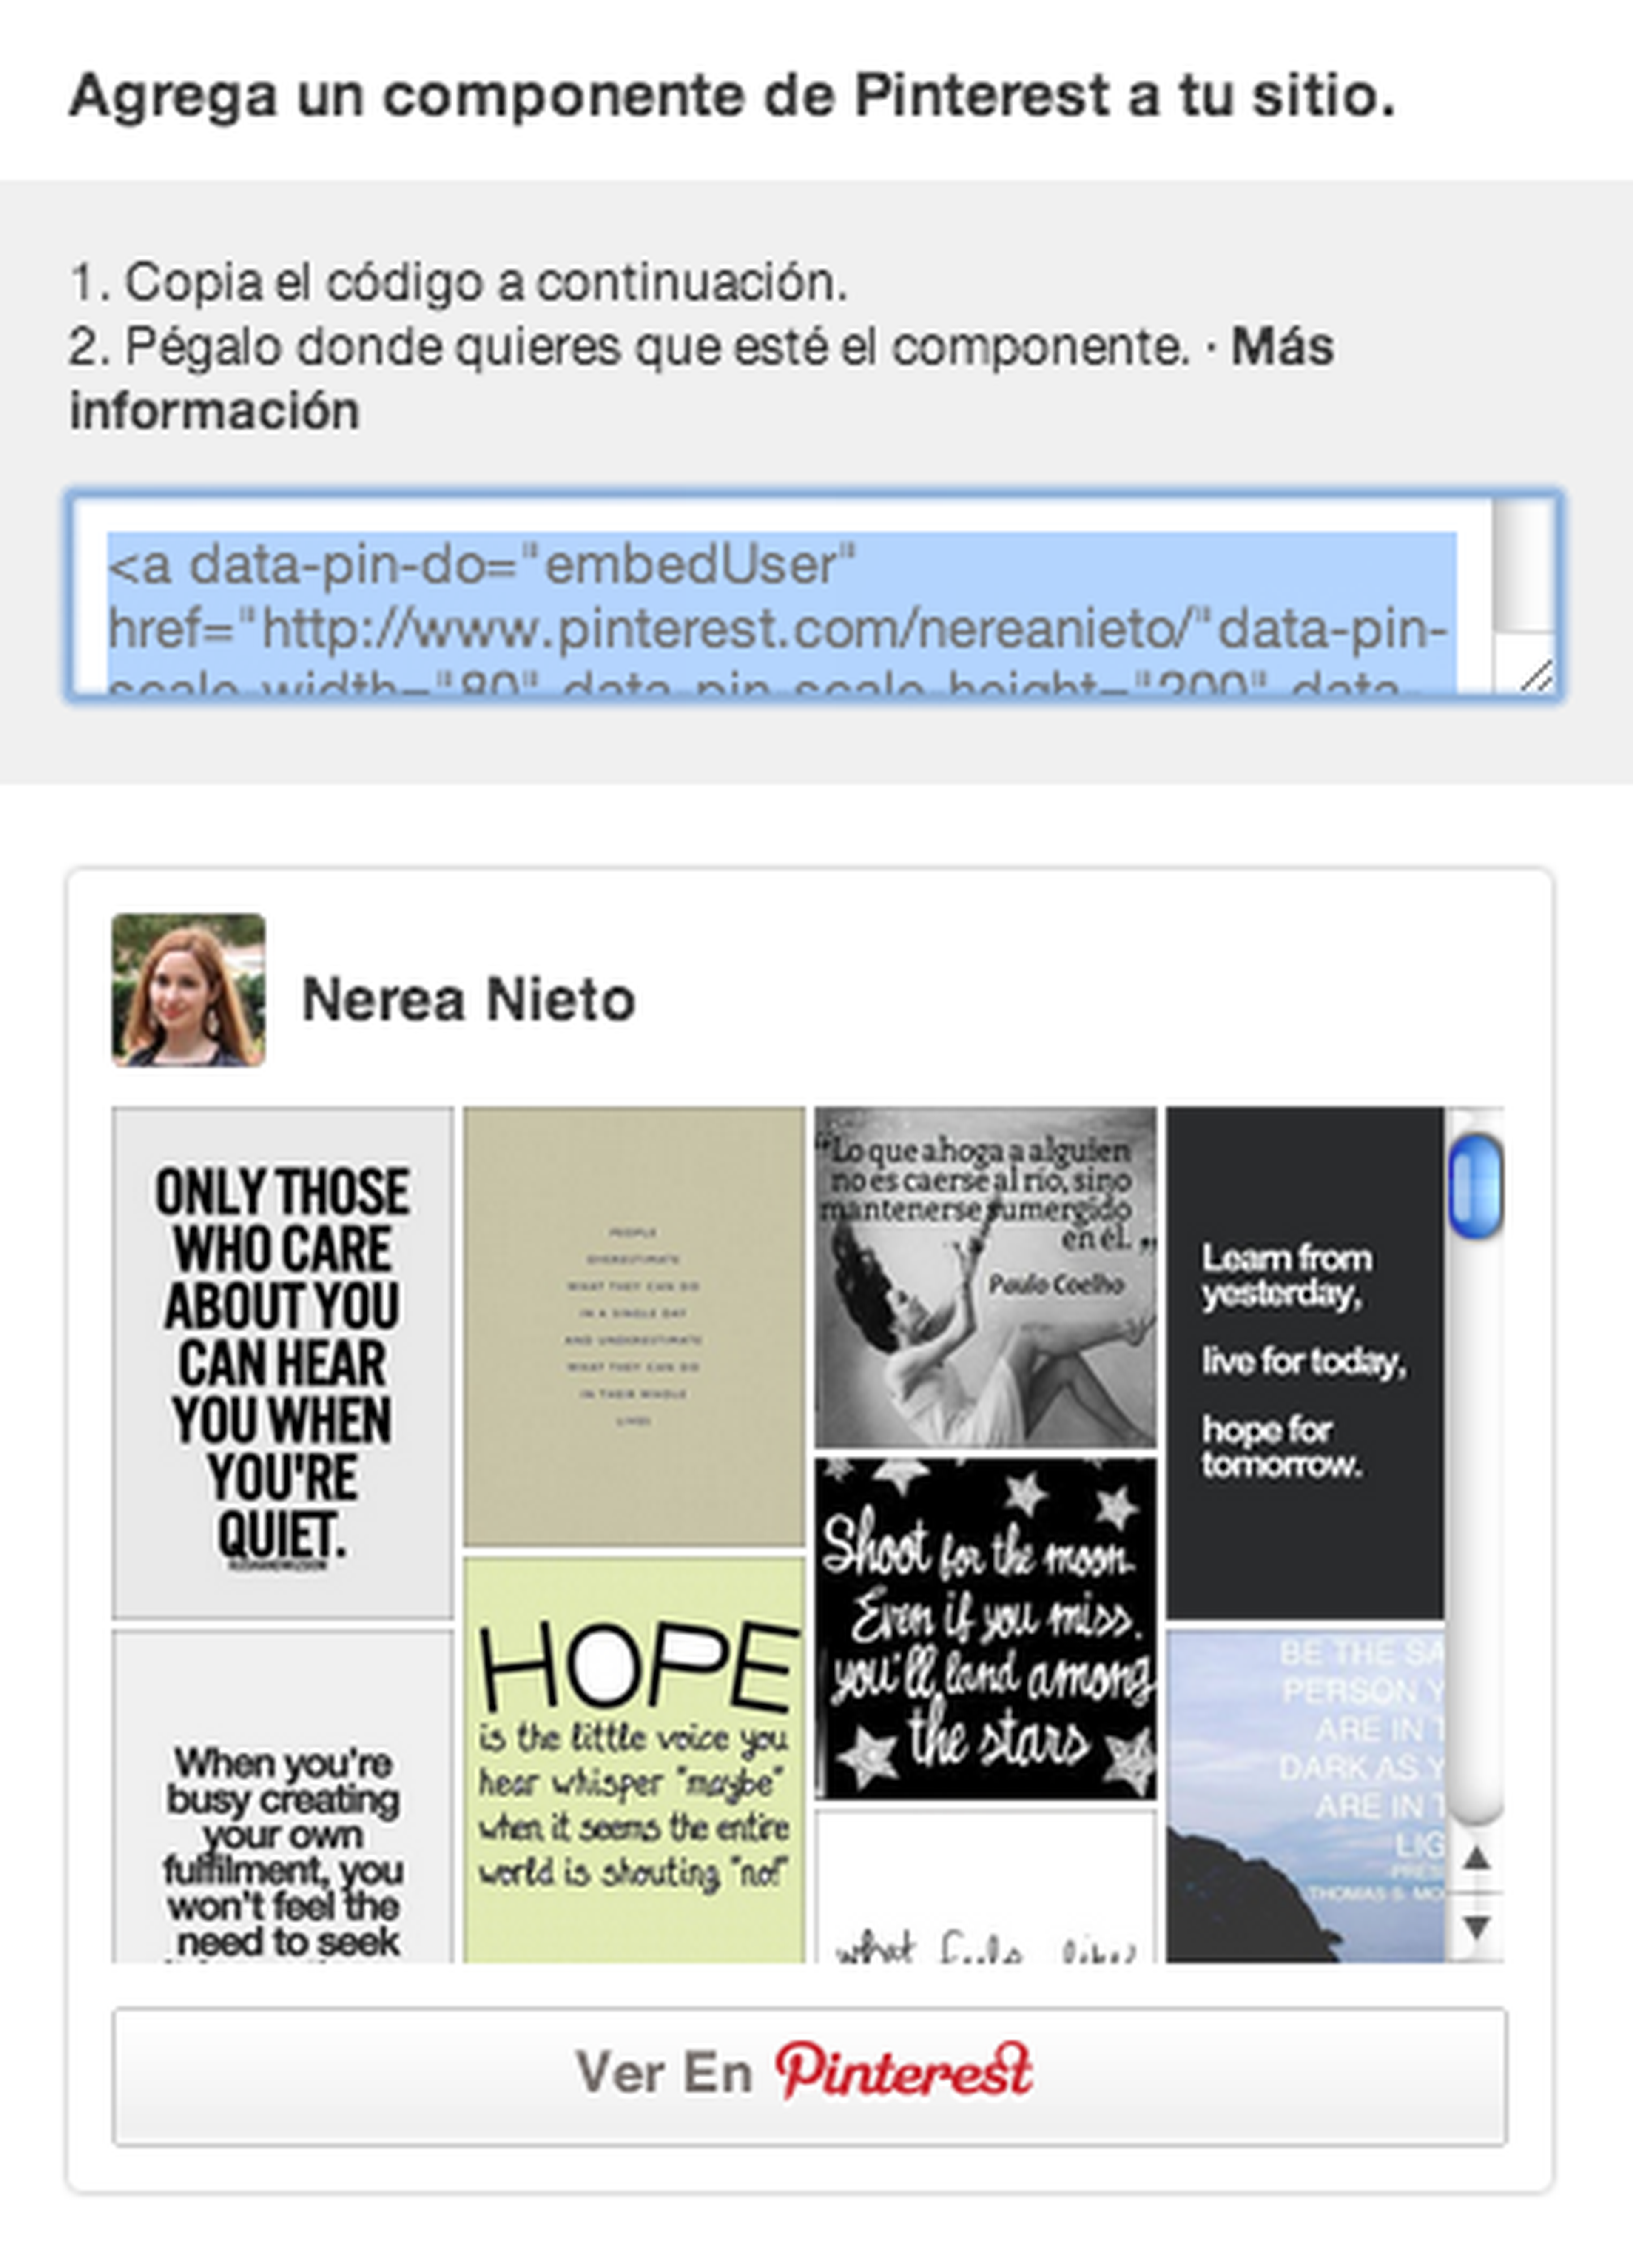 Agregar componente de Pinterest a tu sitio web